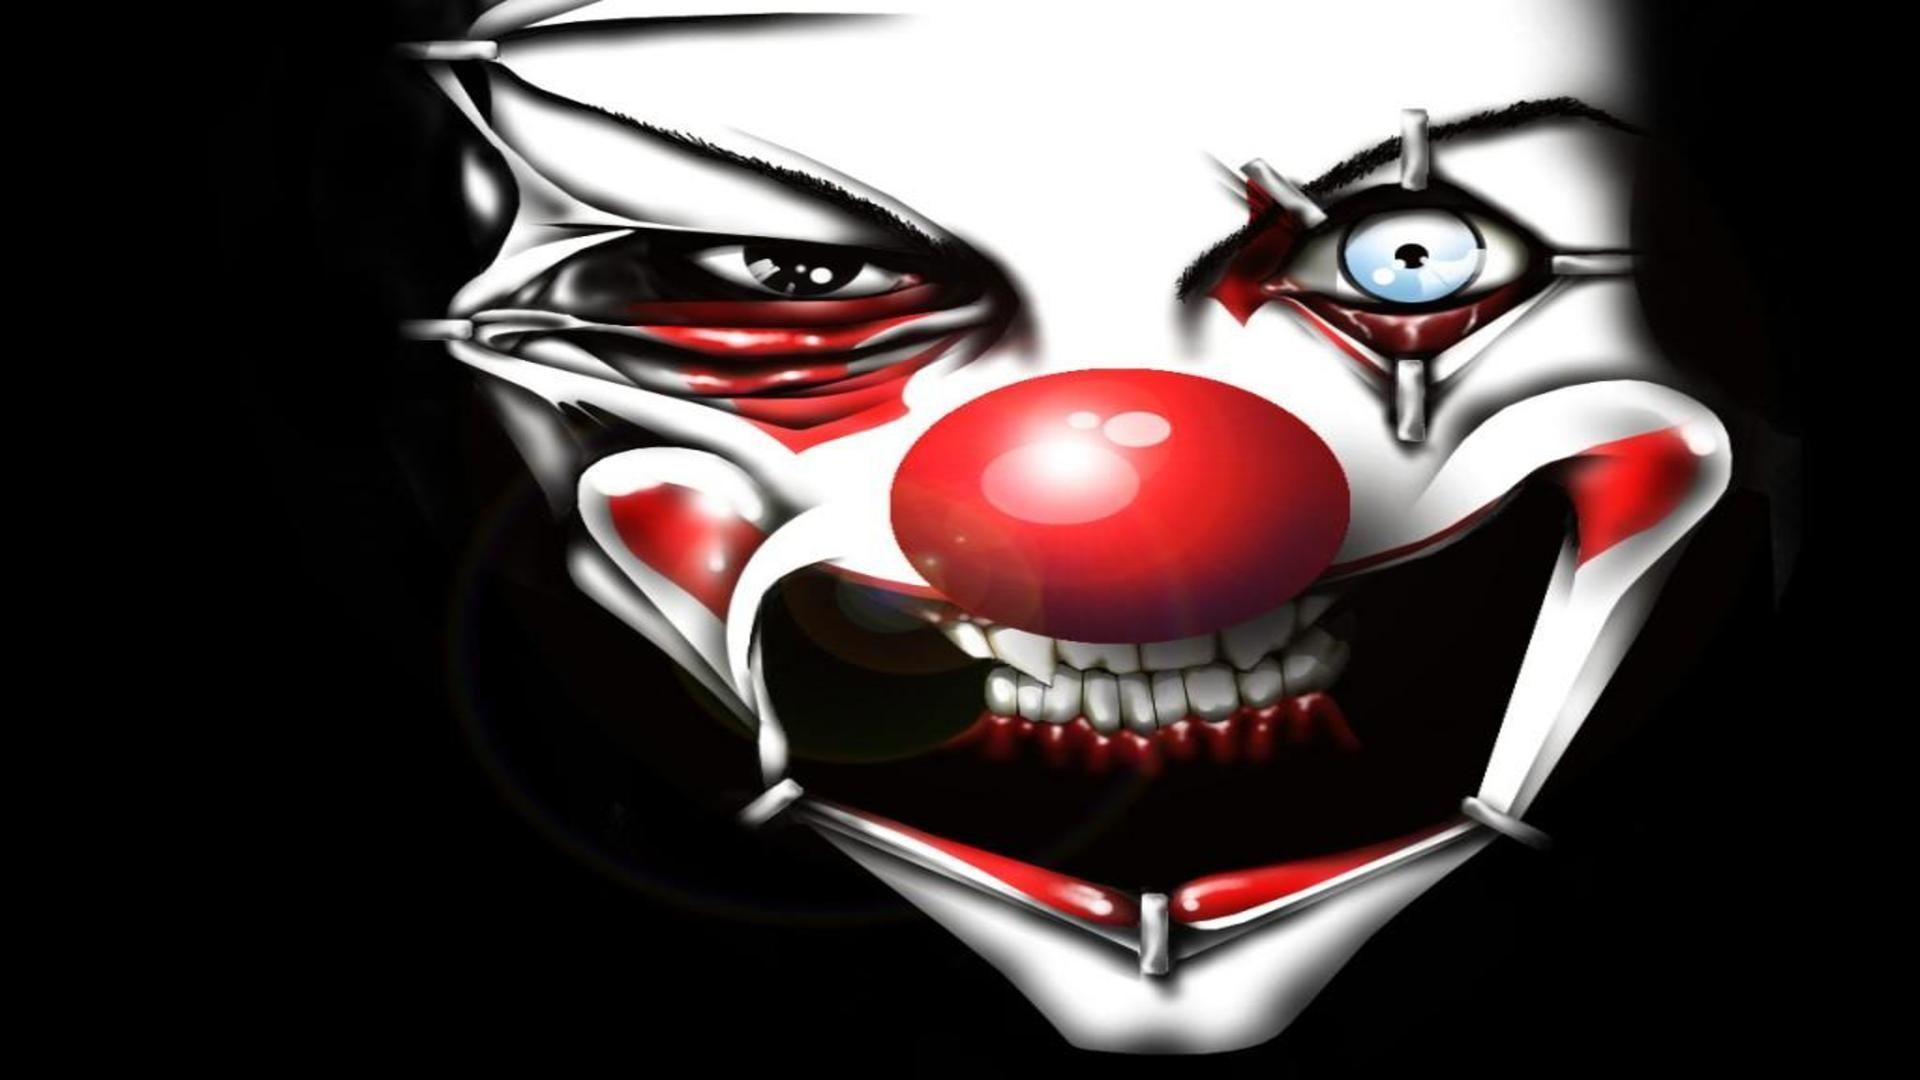 Evil clown face free desktop background wallpaper image